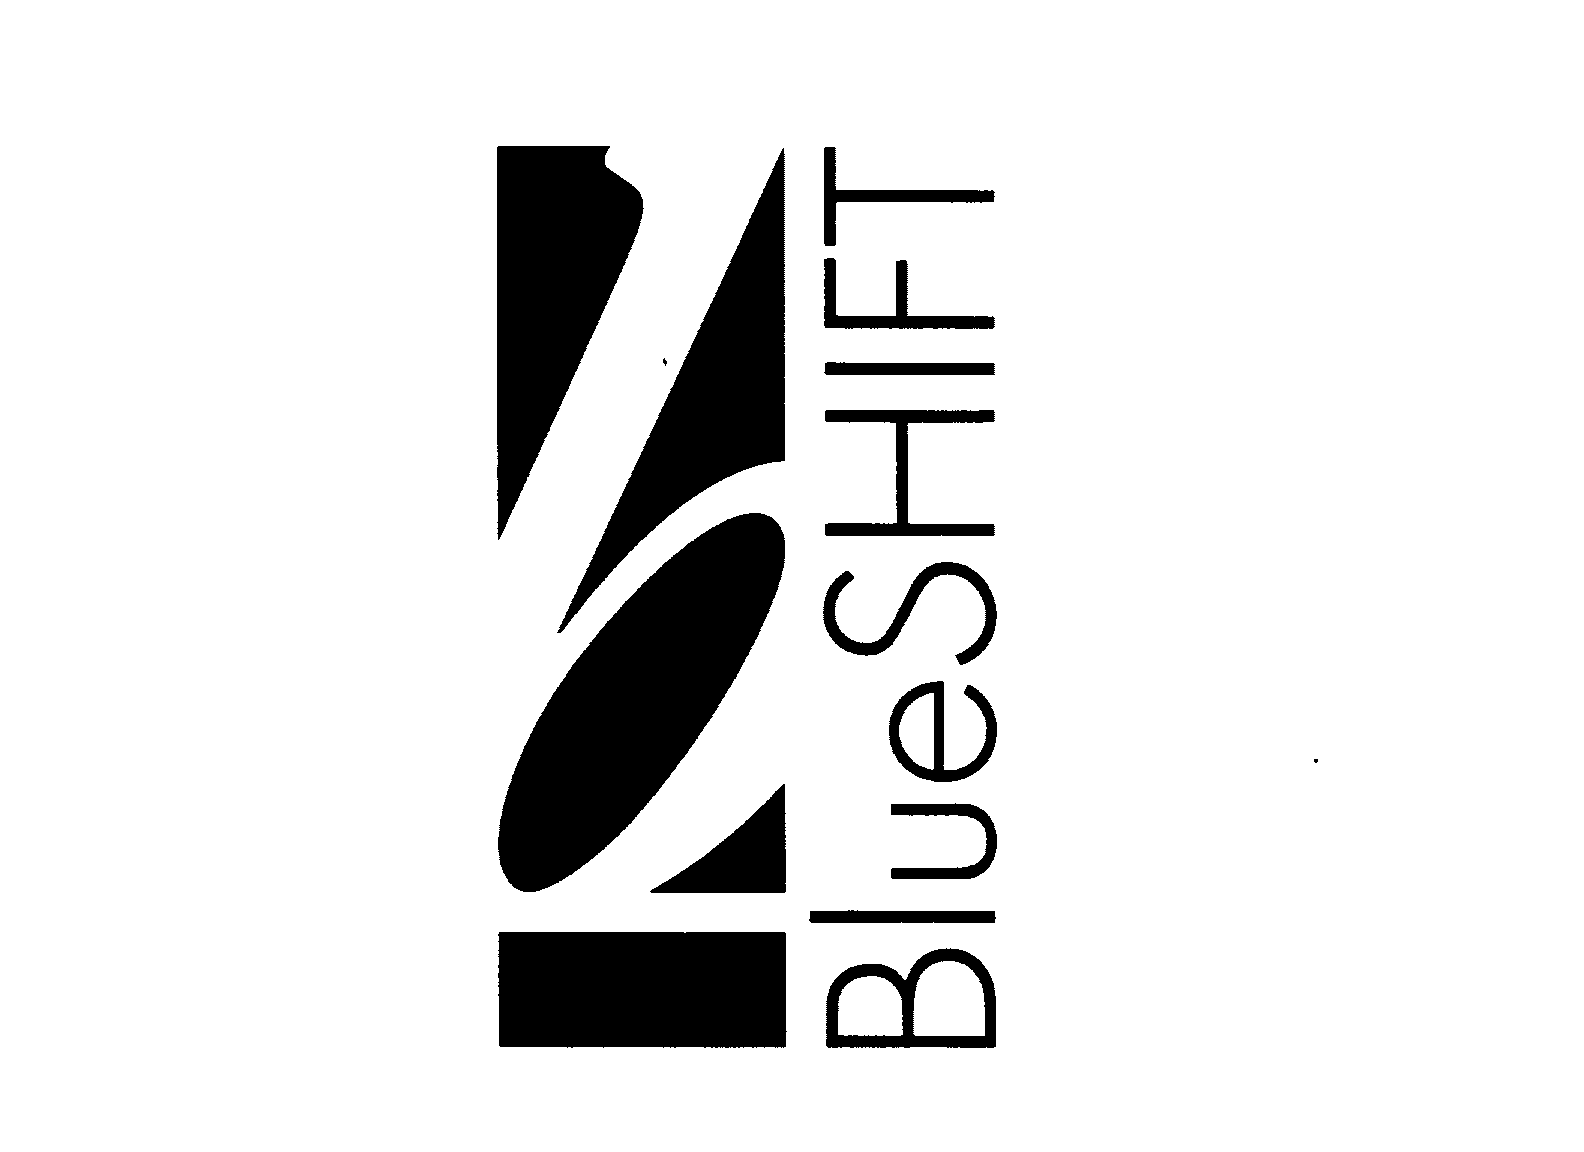 Trademark Logo BLUESHIFT